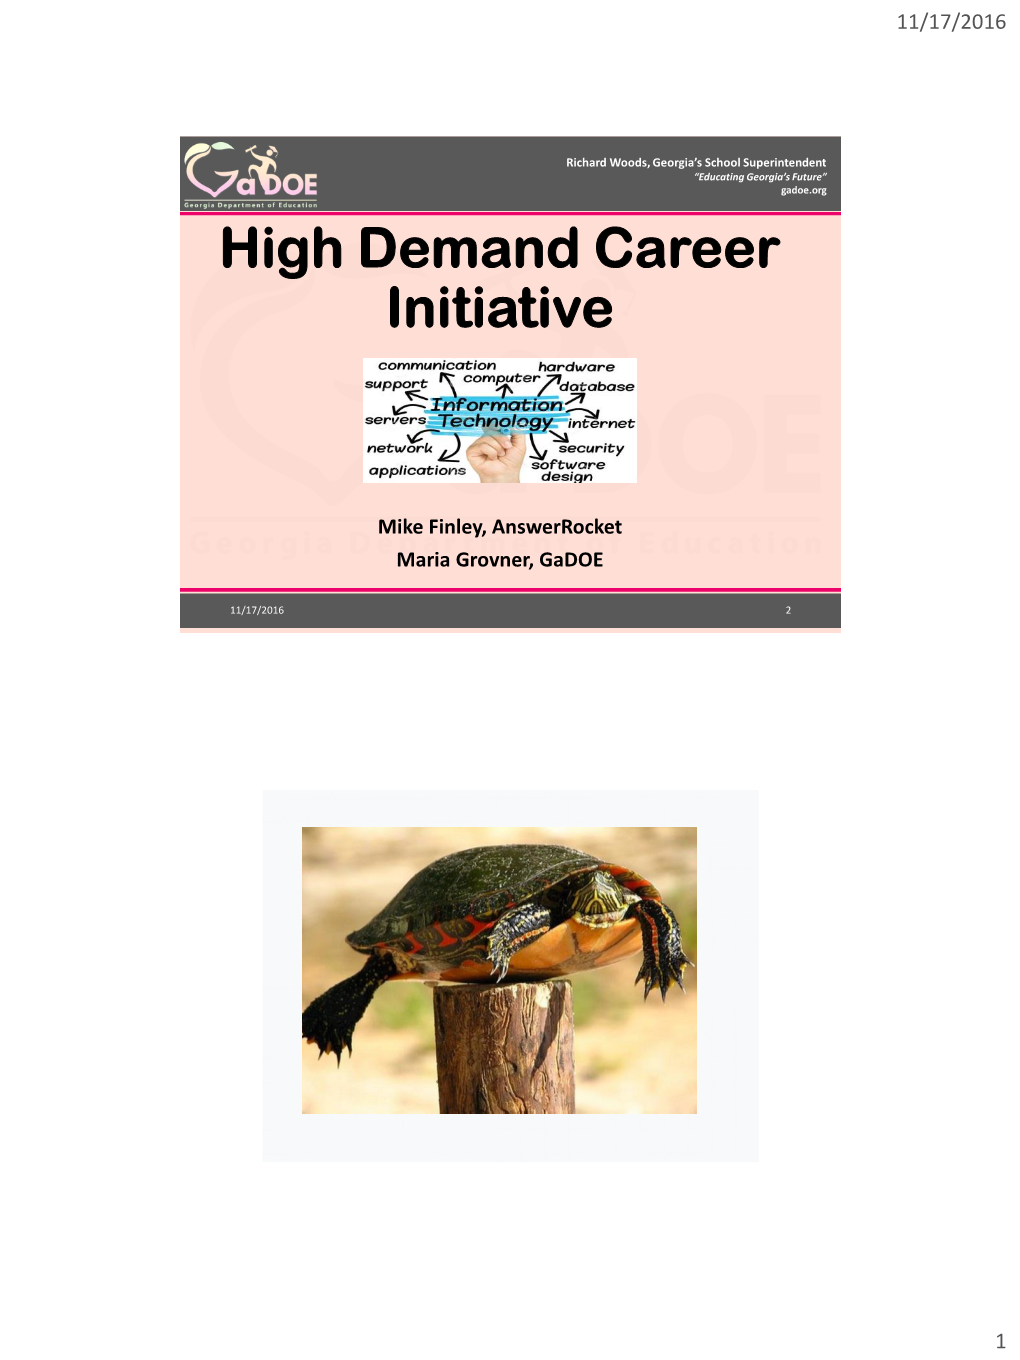 High Demand Career Initiative